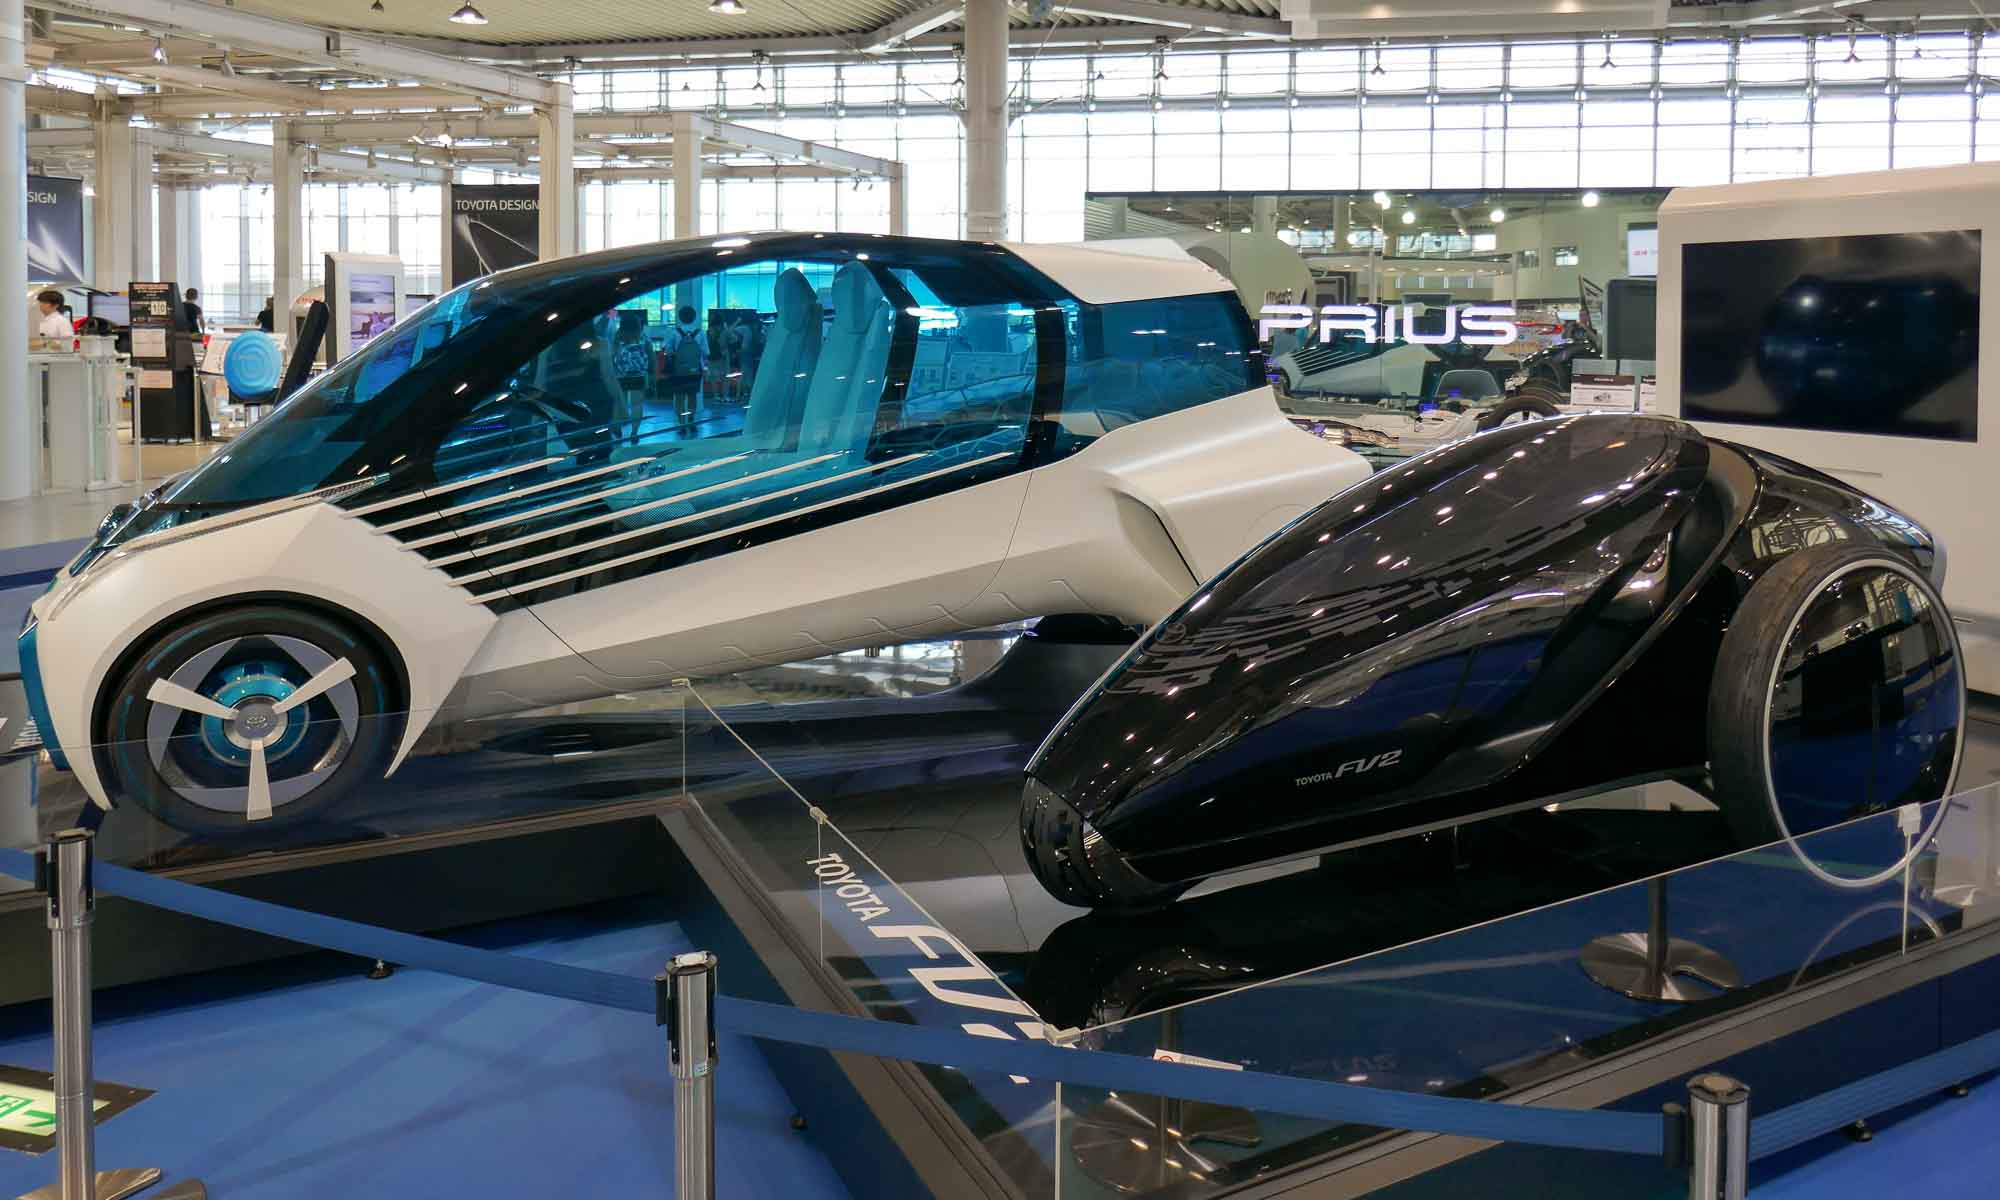 Some of Toyota's futuristic models at MegaWeb